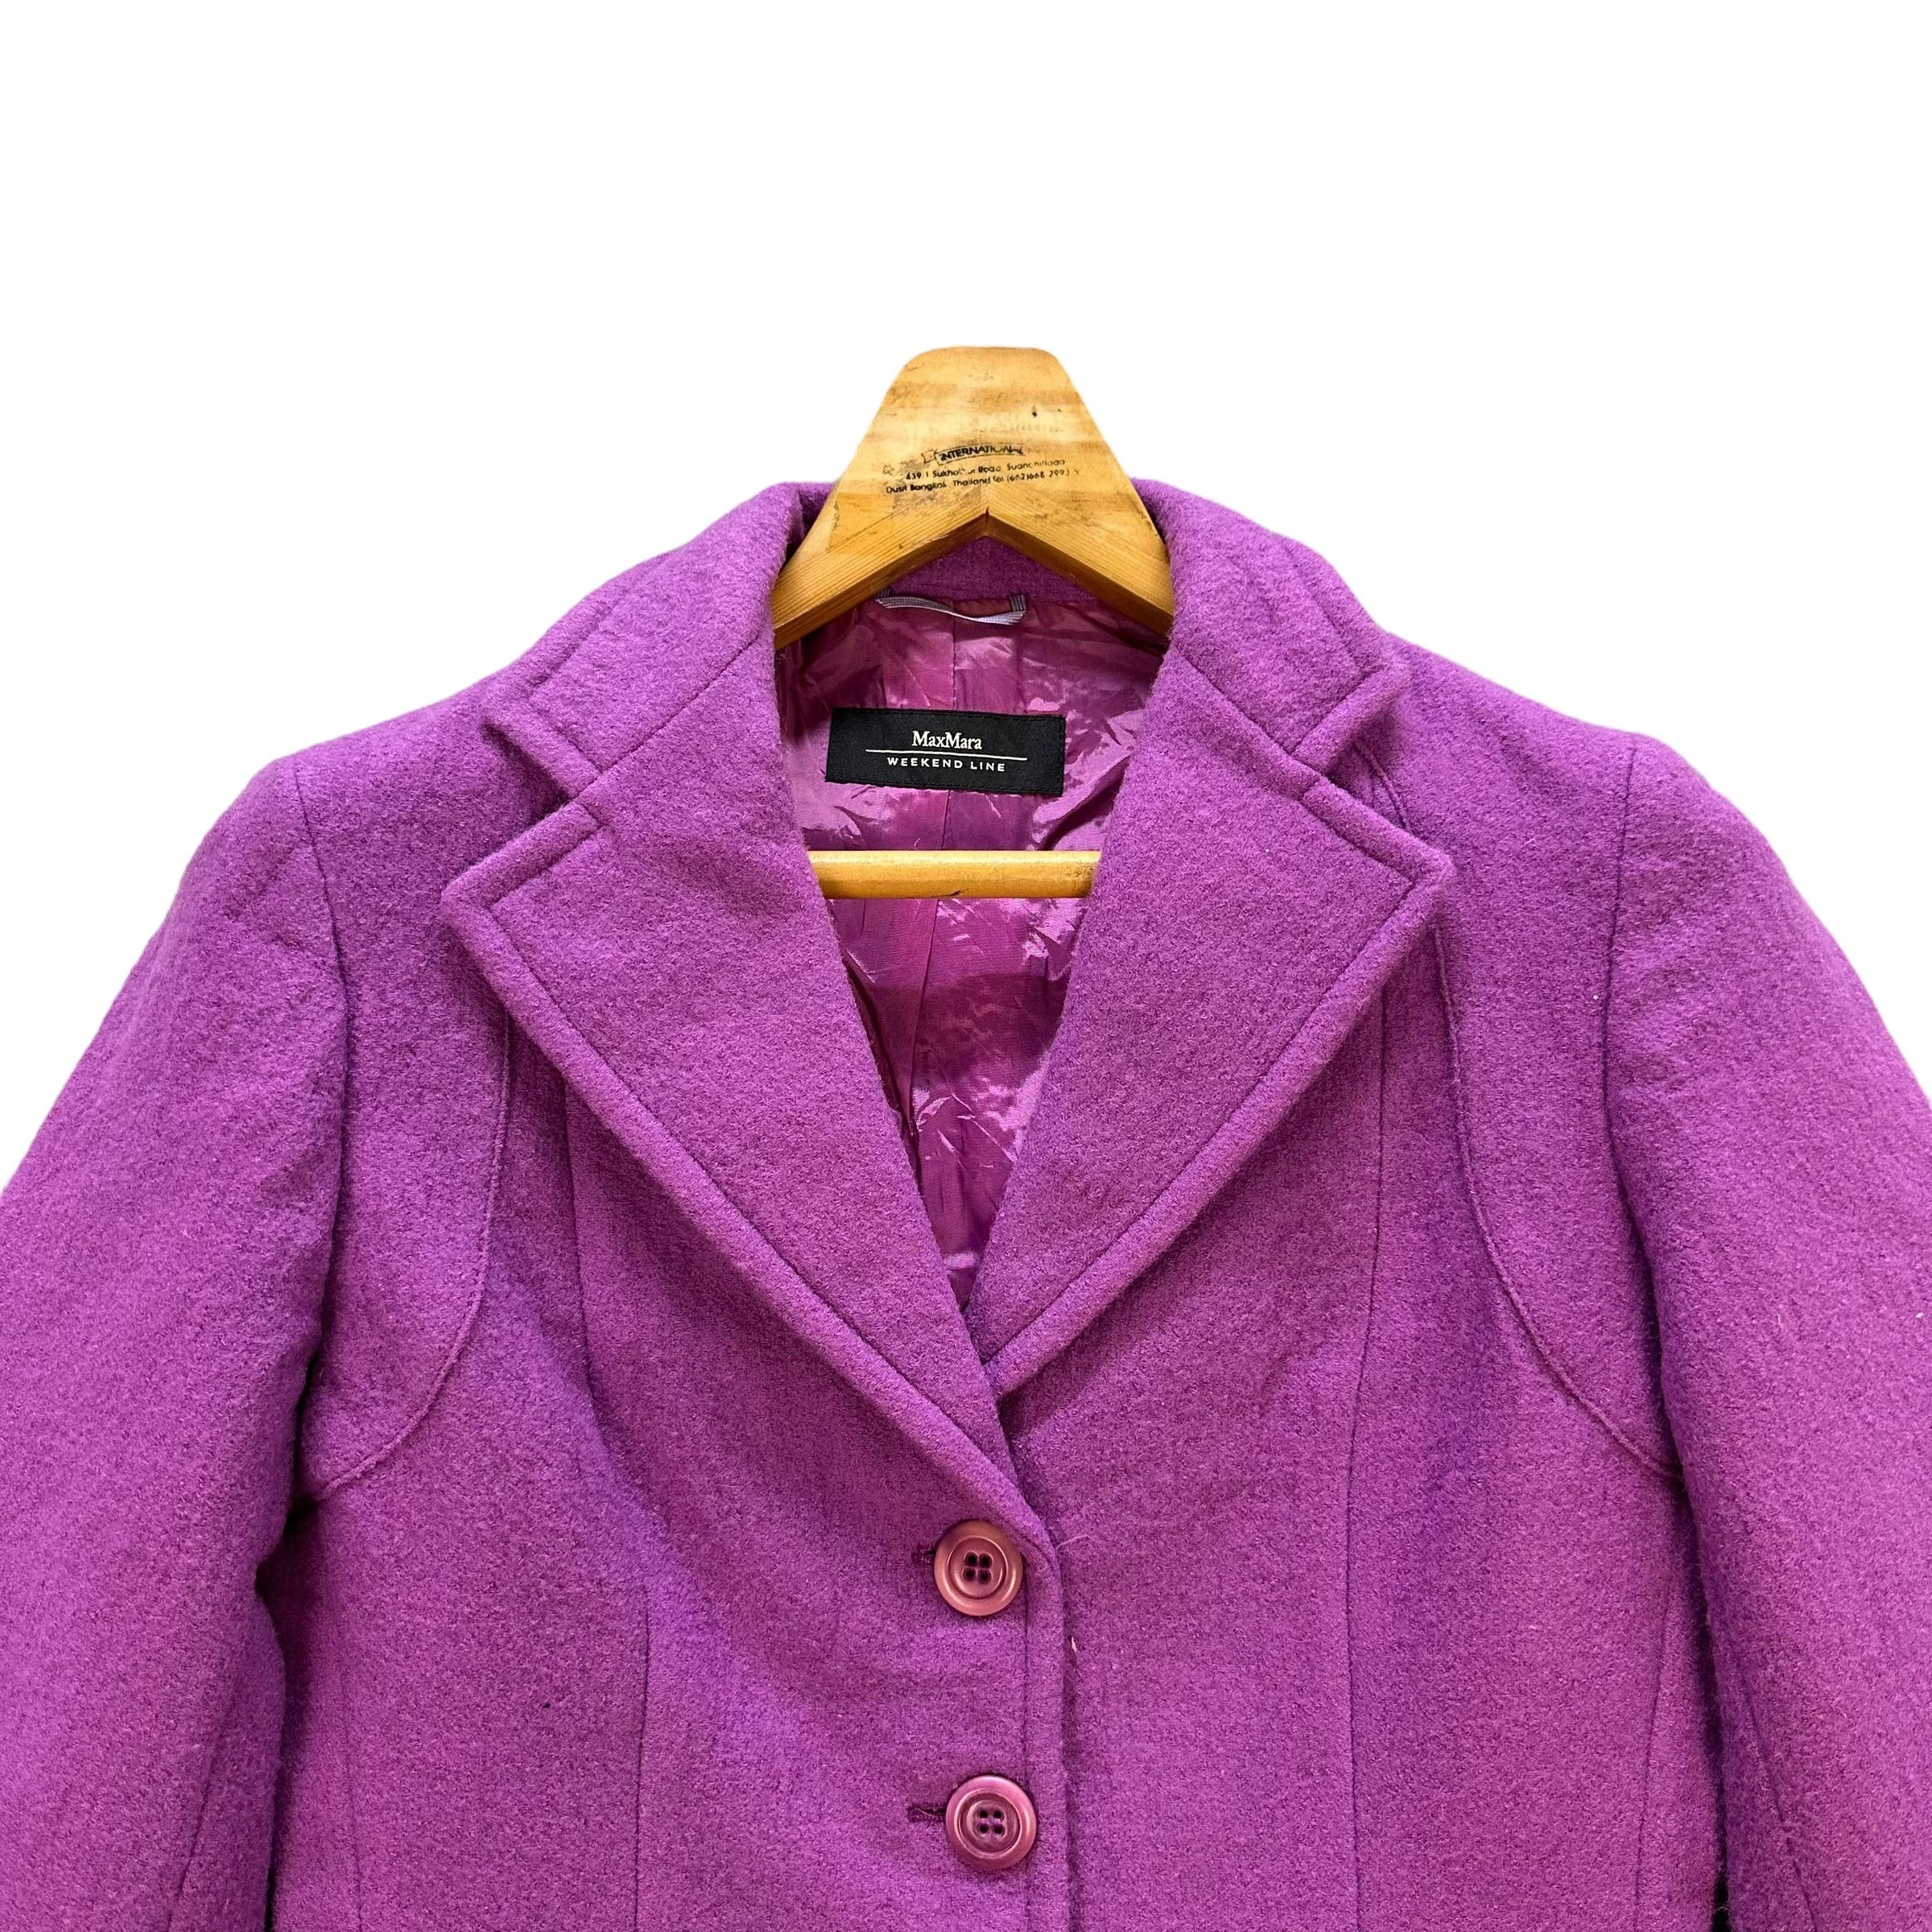 Designer - Max Mara Purple Wool Double Collar Jacket #9132-60 - 2